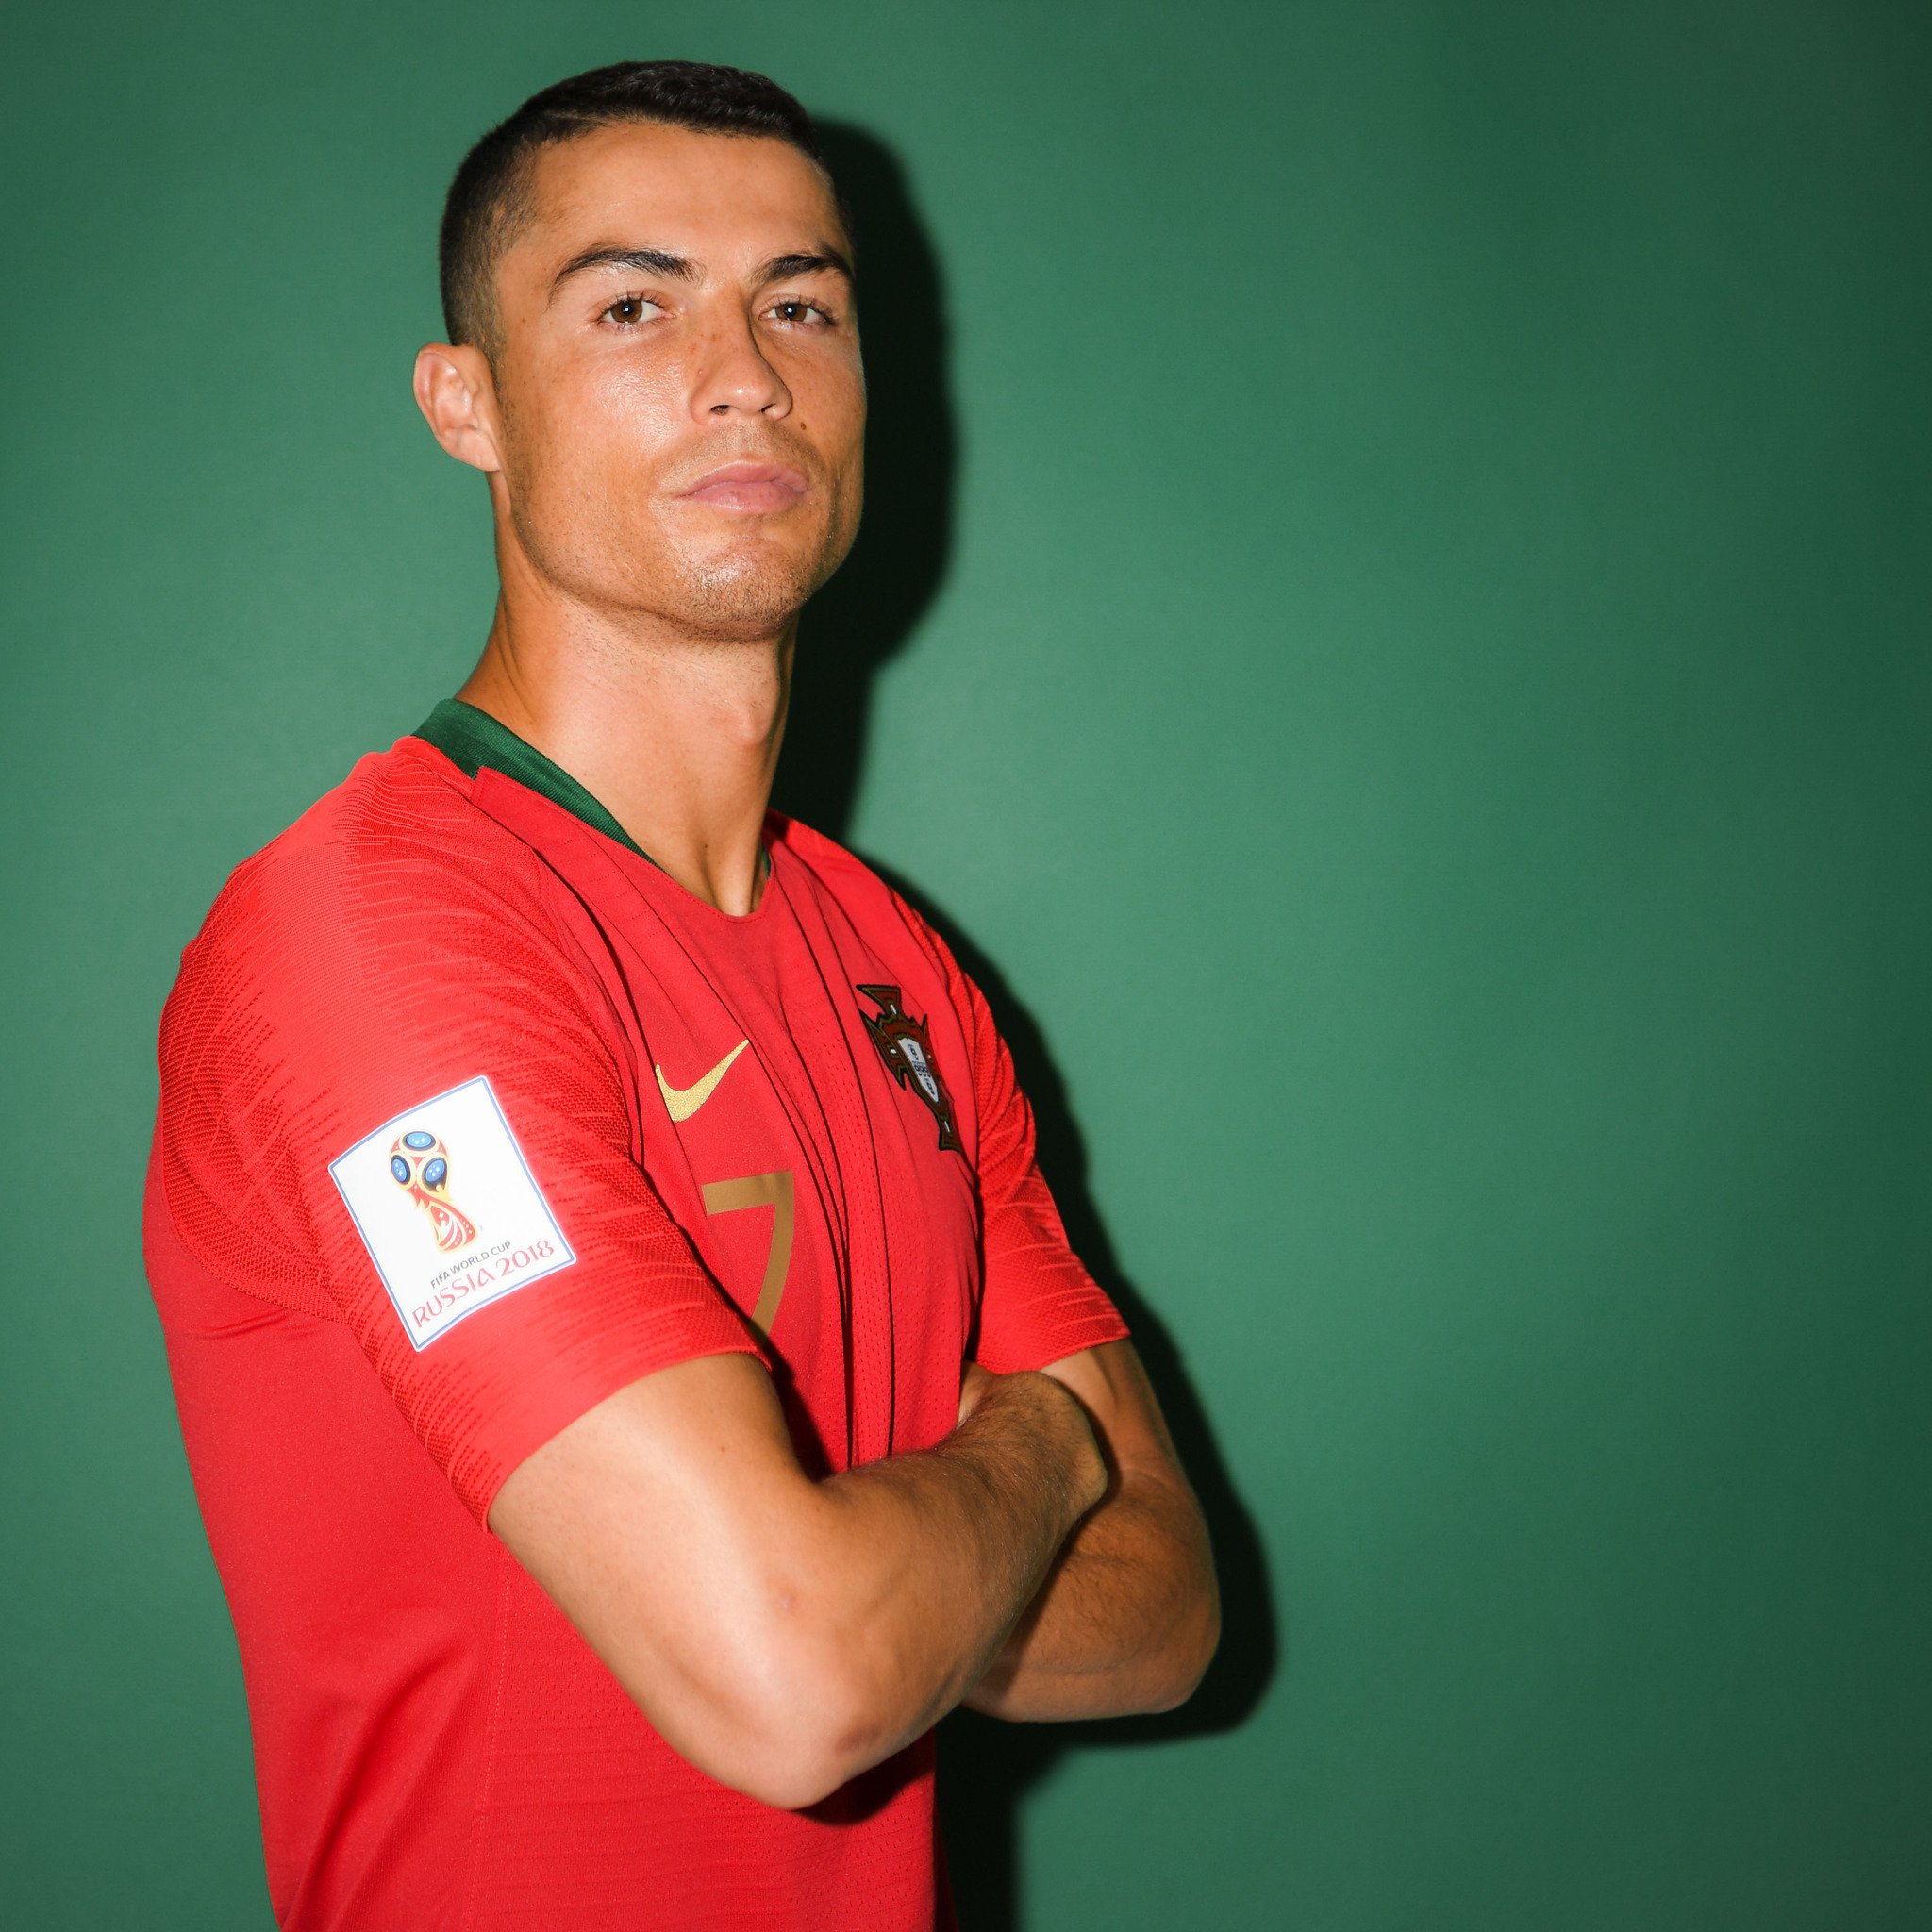 Cristiano Ronaldo Portugal Portrait iPad Air HD 4k Wallpaper, Image, Background, Photo and Picture